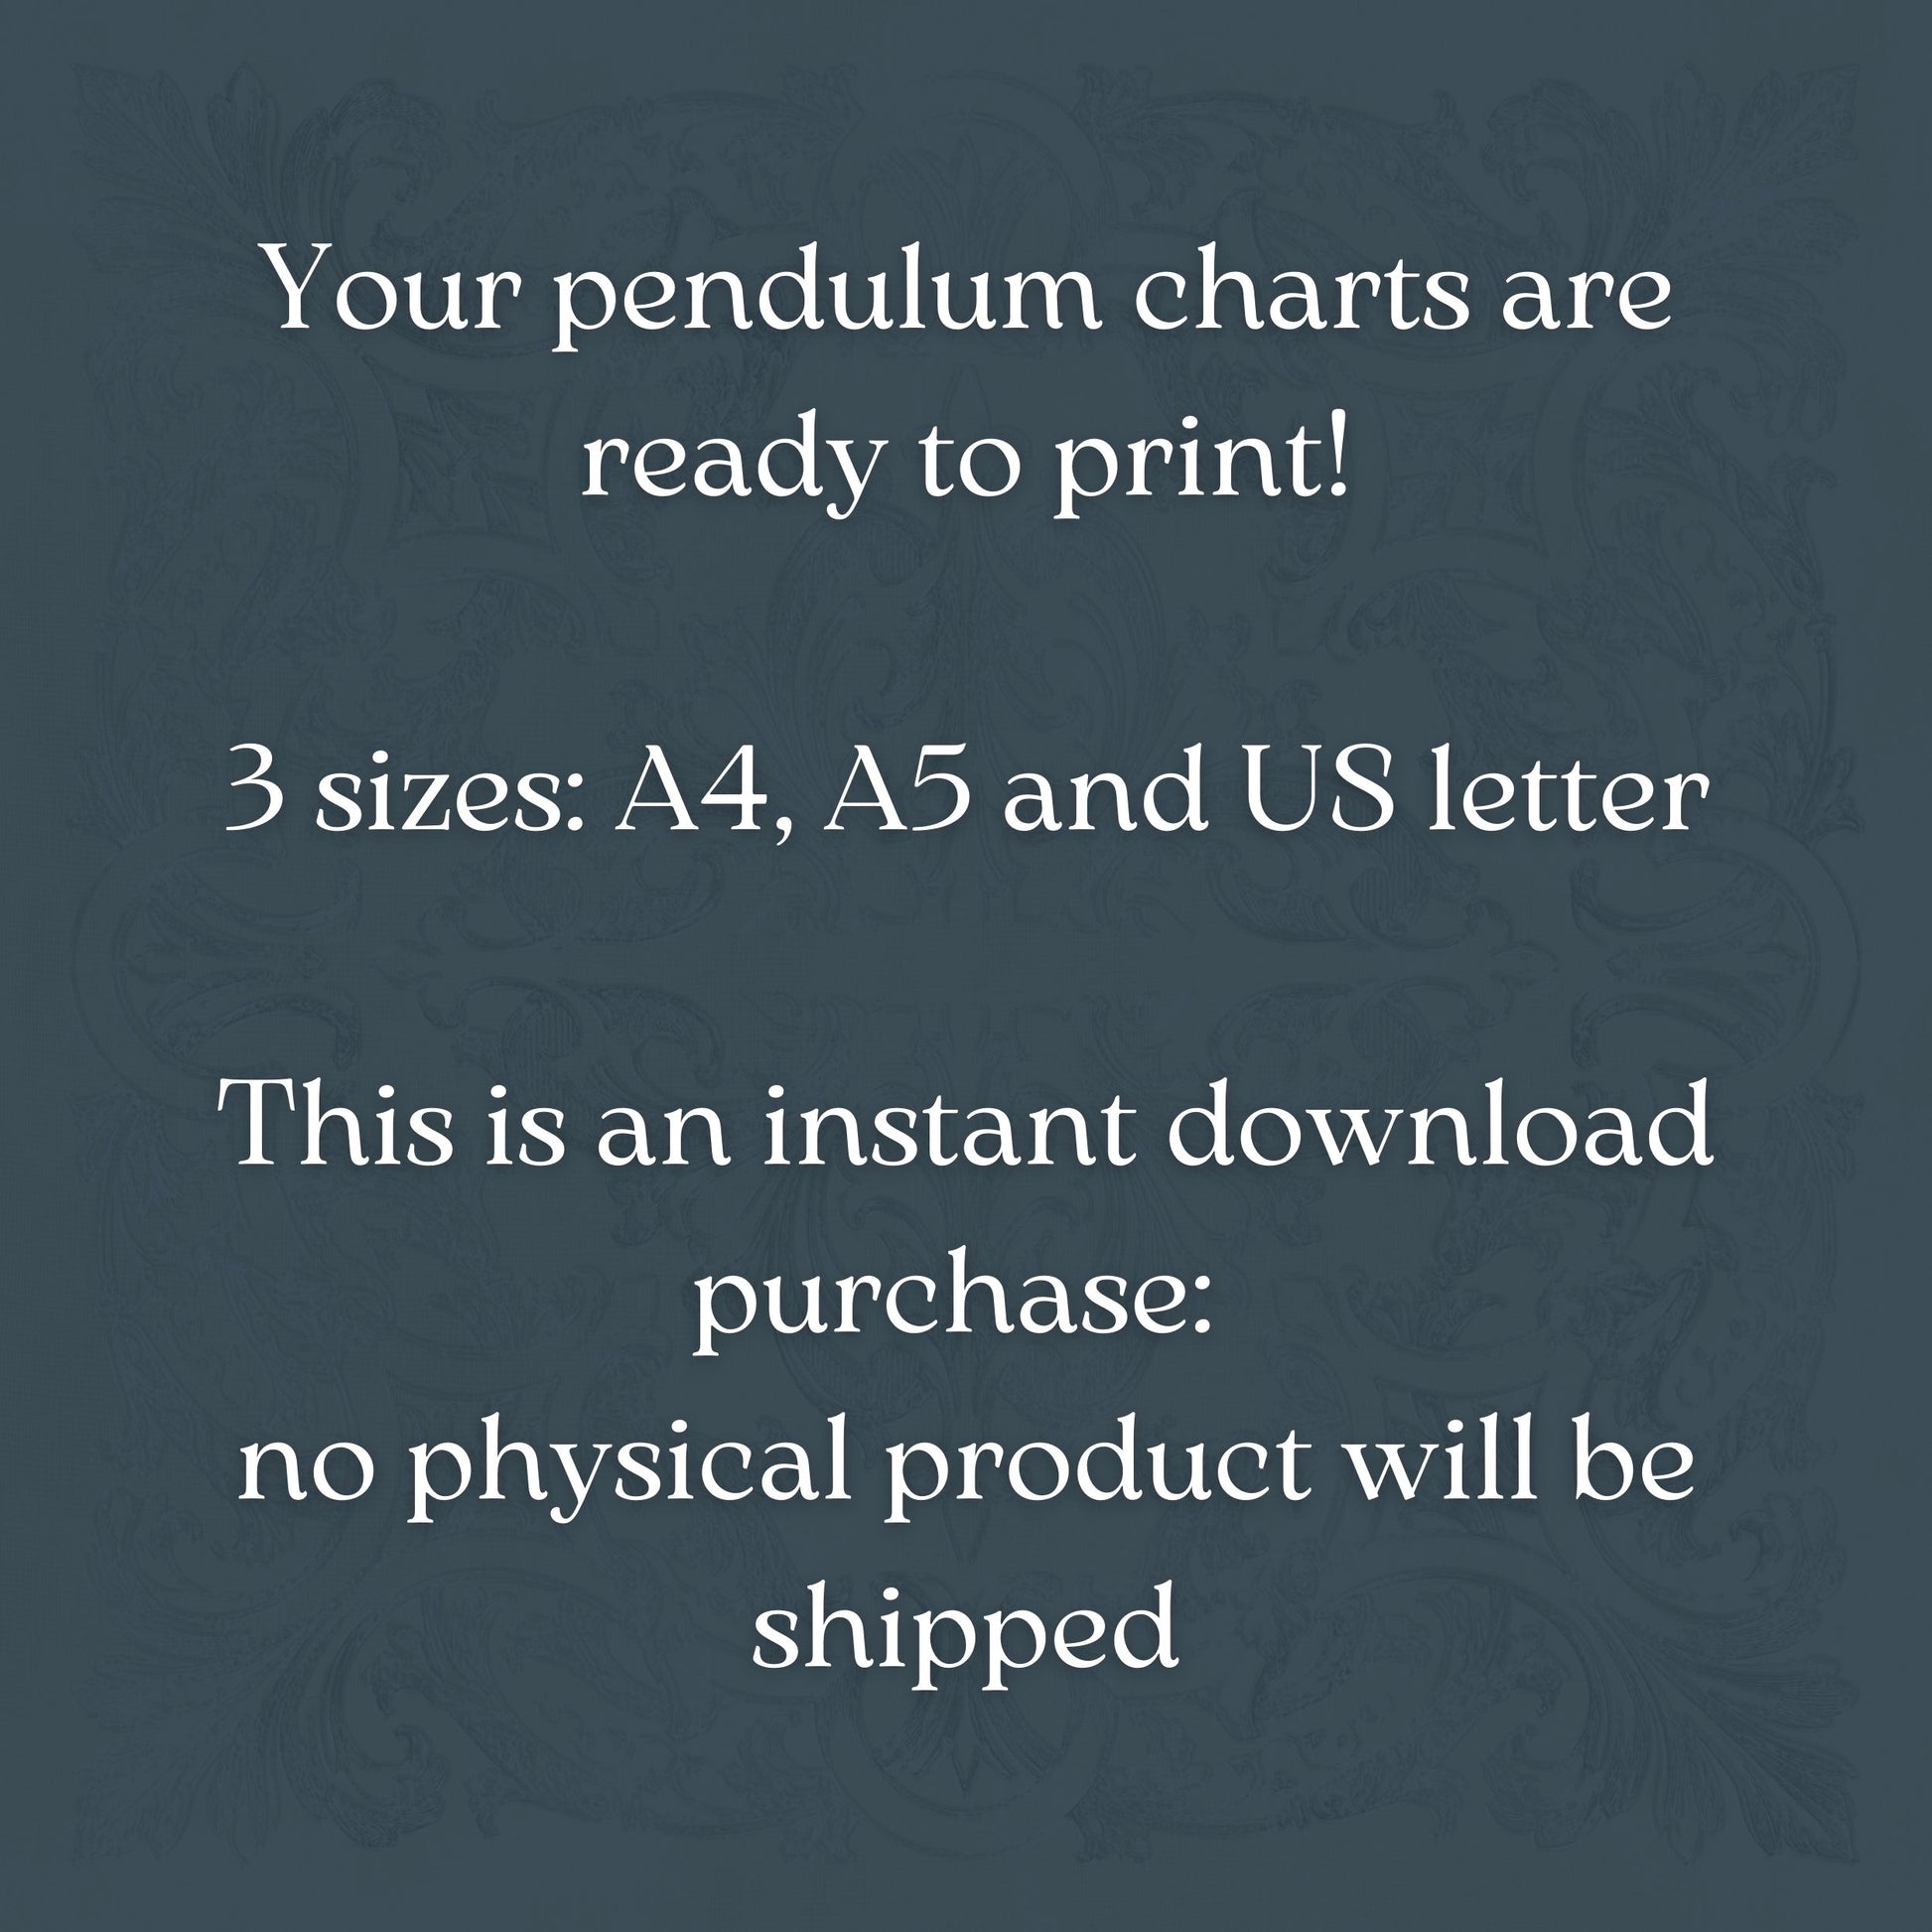 Starter pack : 5 printable pendulum boards Baguette Magick